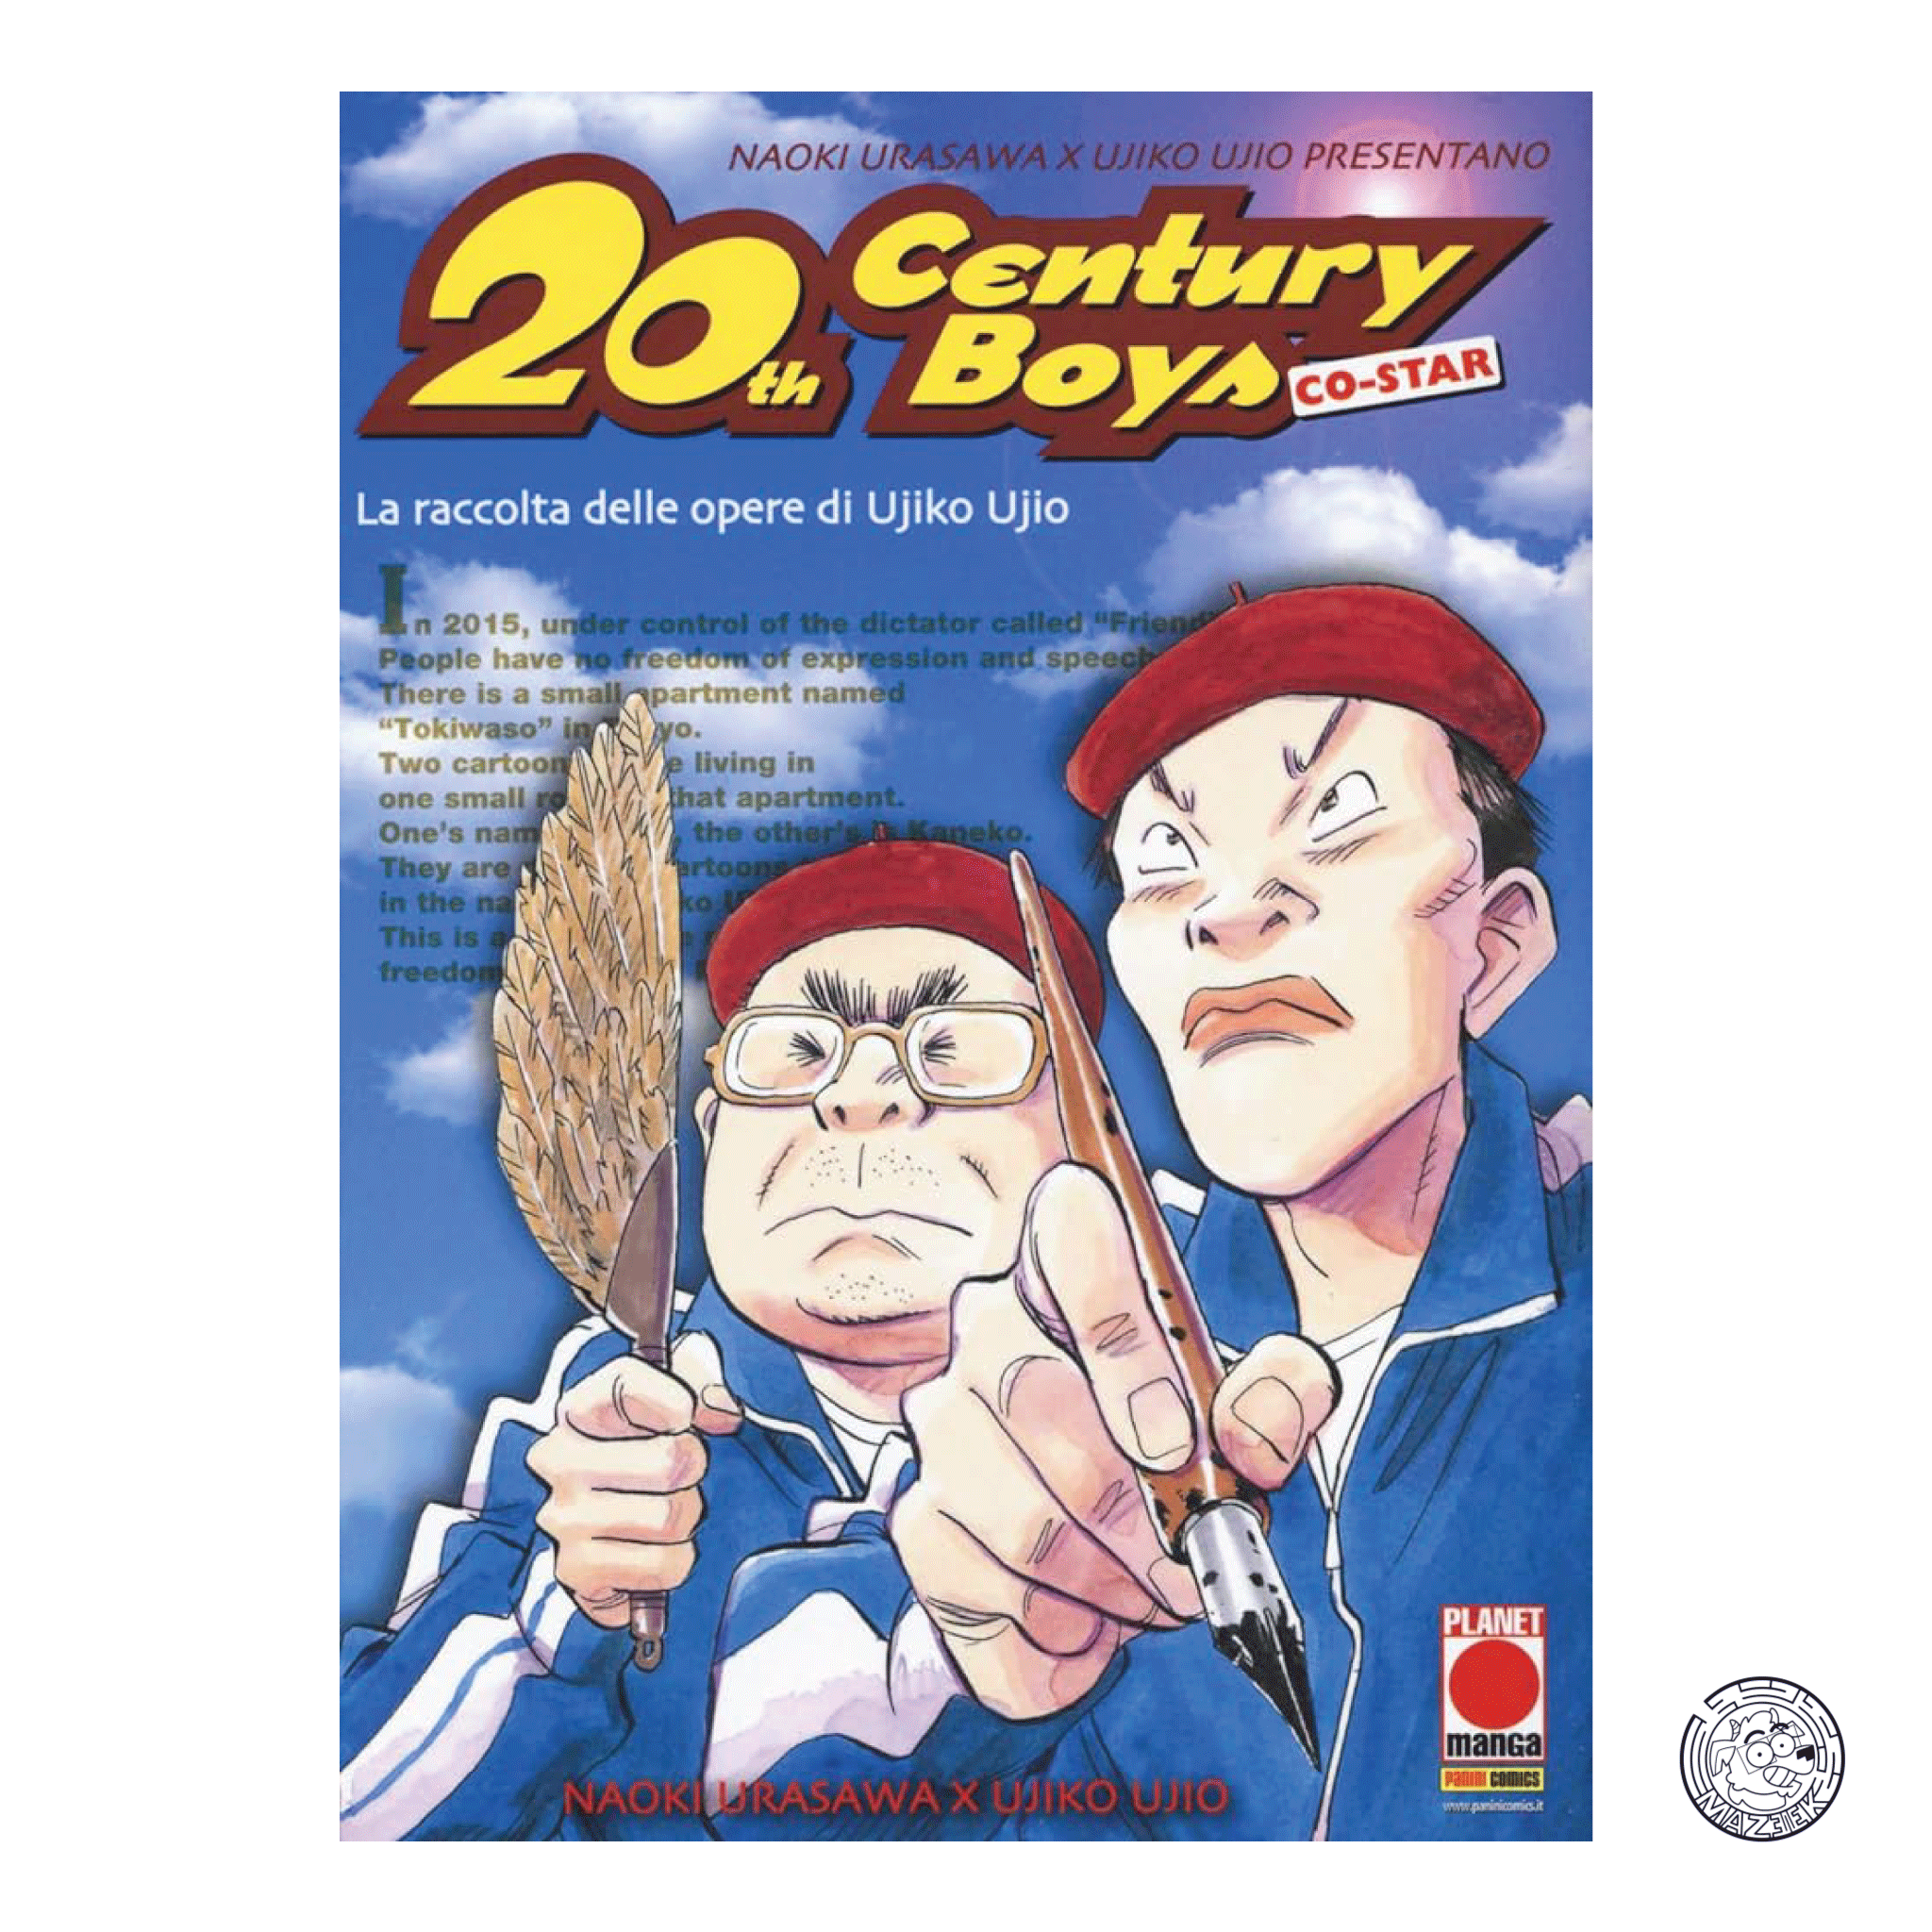 20th Century Boys Co-Star